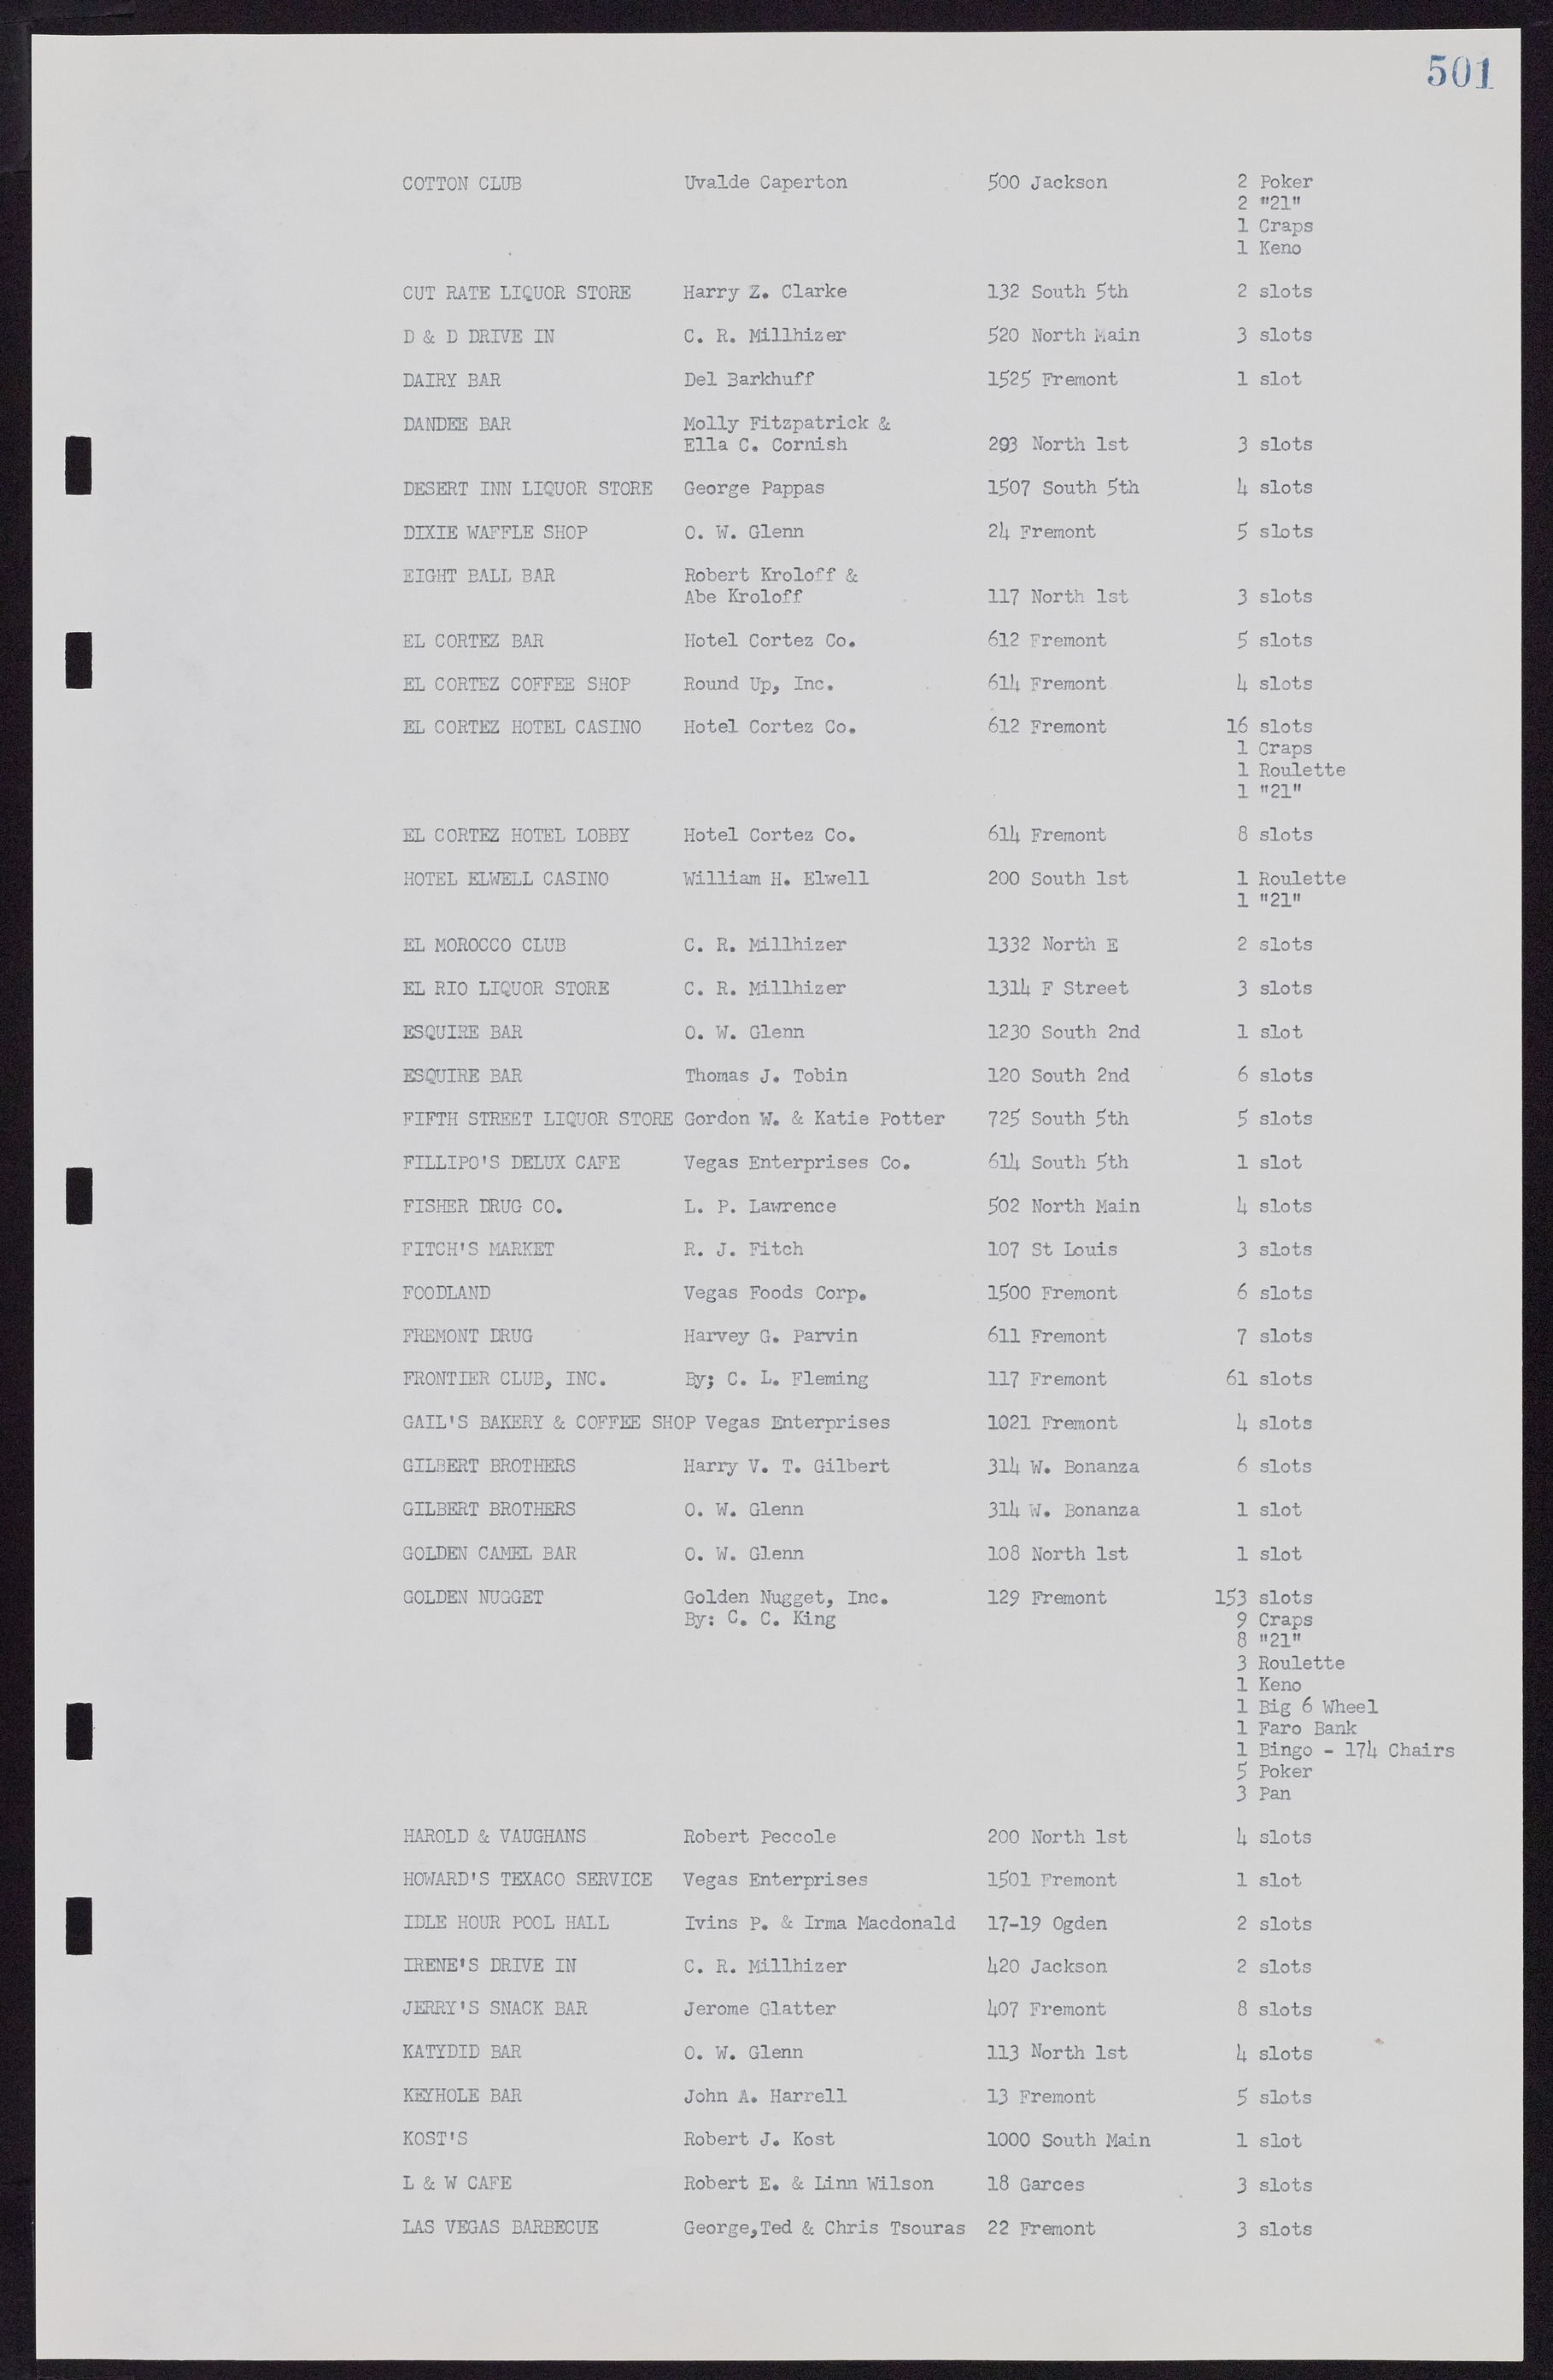 Las Vegas City Commission Minutes, November 7, 1949 to May 21, 1952, lvc000007-517